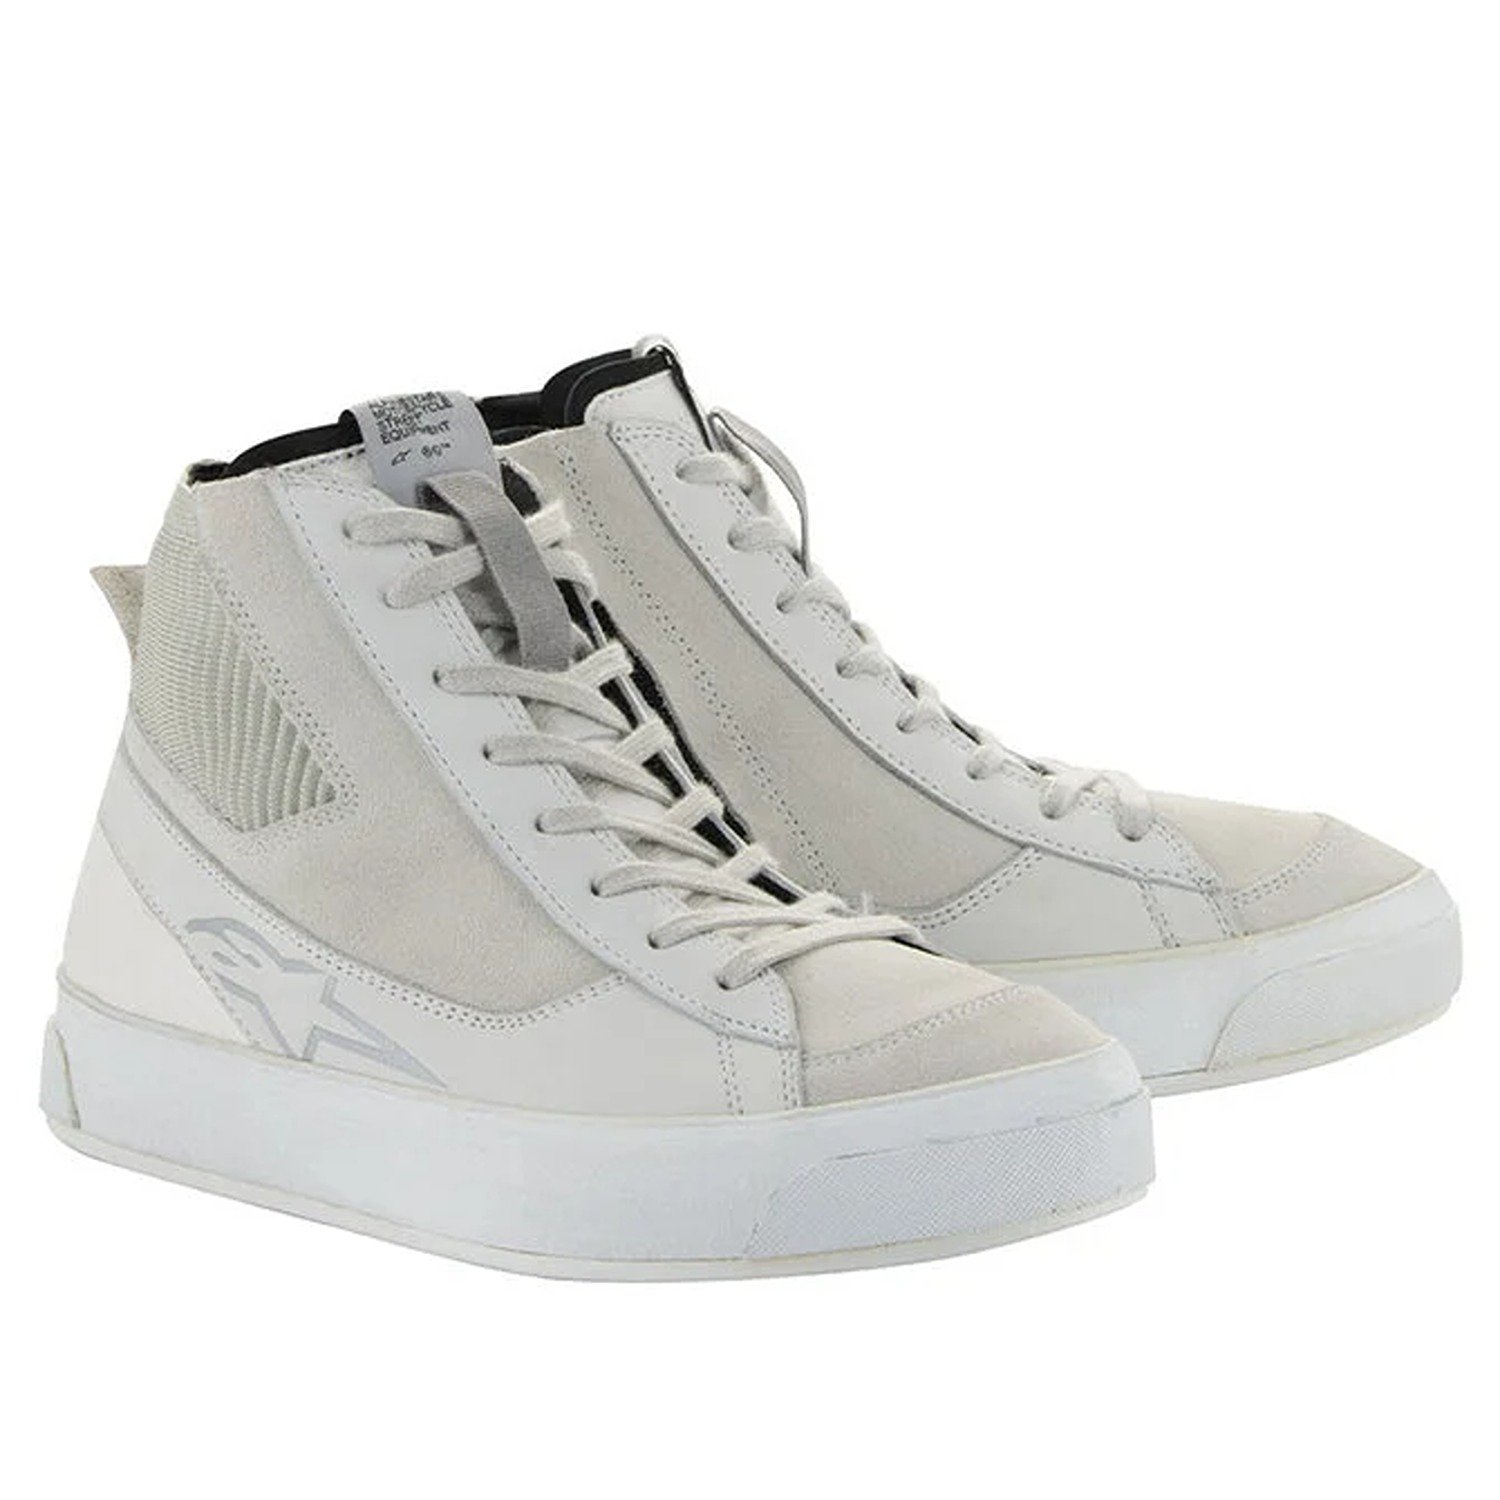 Image of Alpinestars Stella Stated Podium Shoes White Cool Gray Size US 10 EN